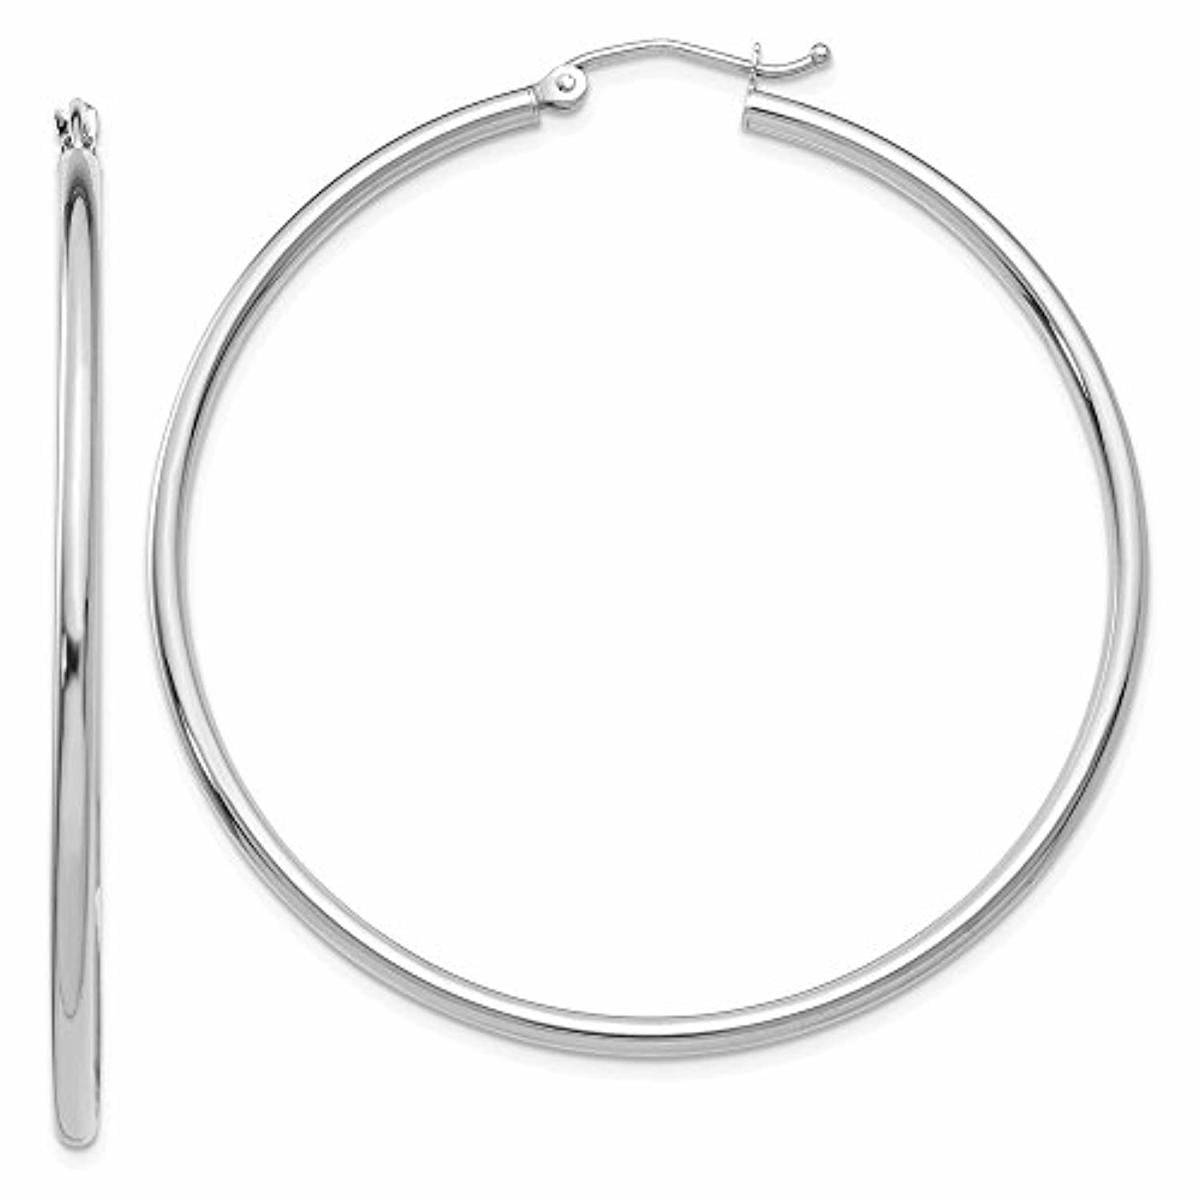 Earring Chest - Sterling Silver Hoop Earrings 40mm, 1 5/8